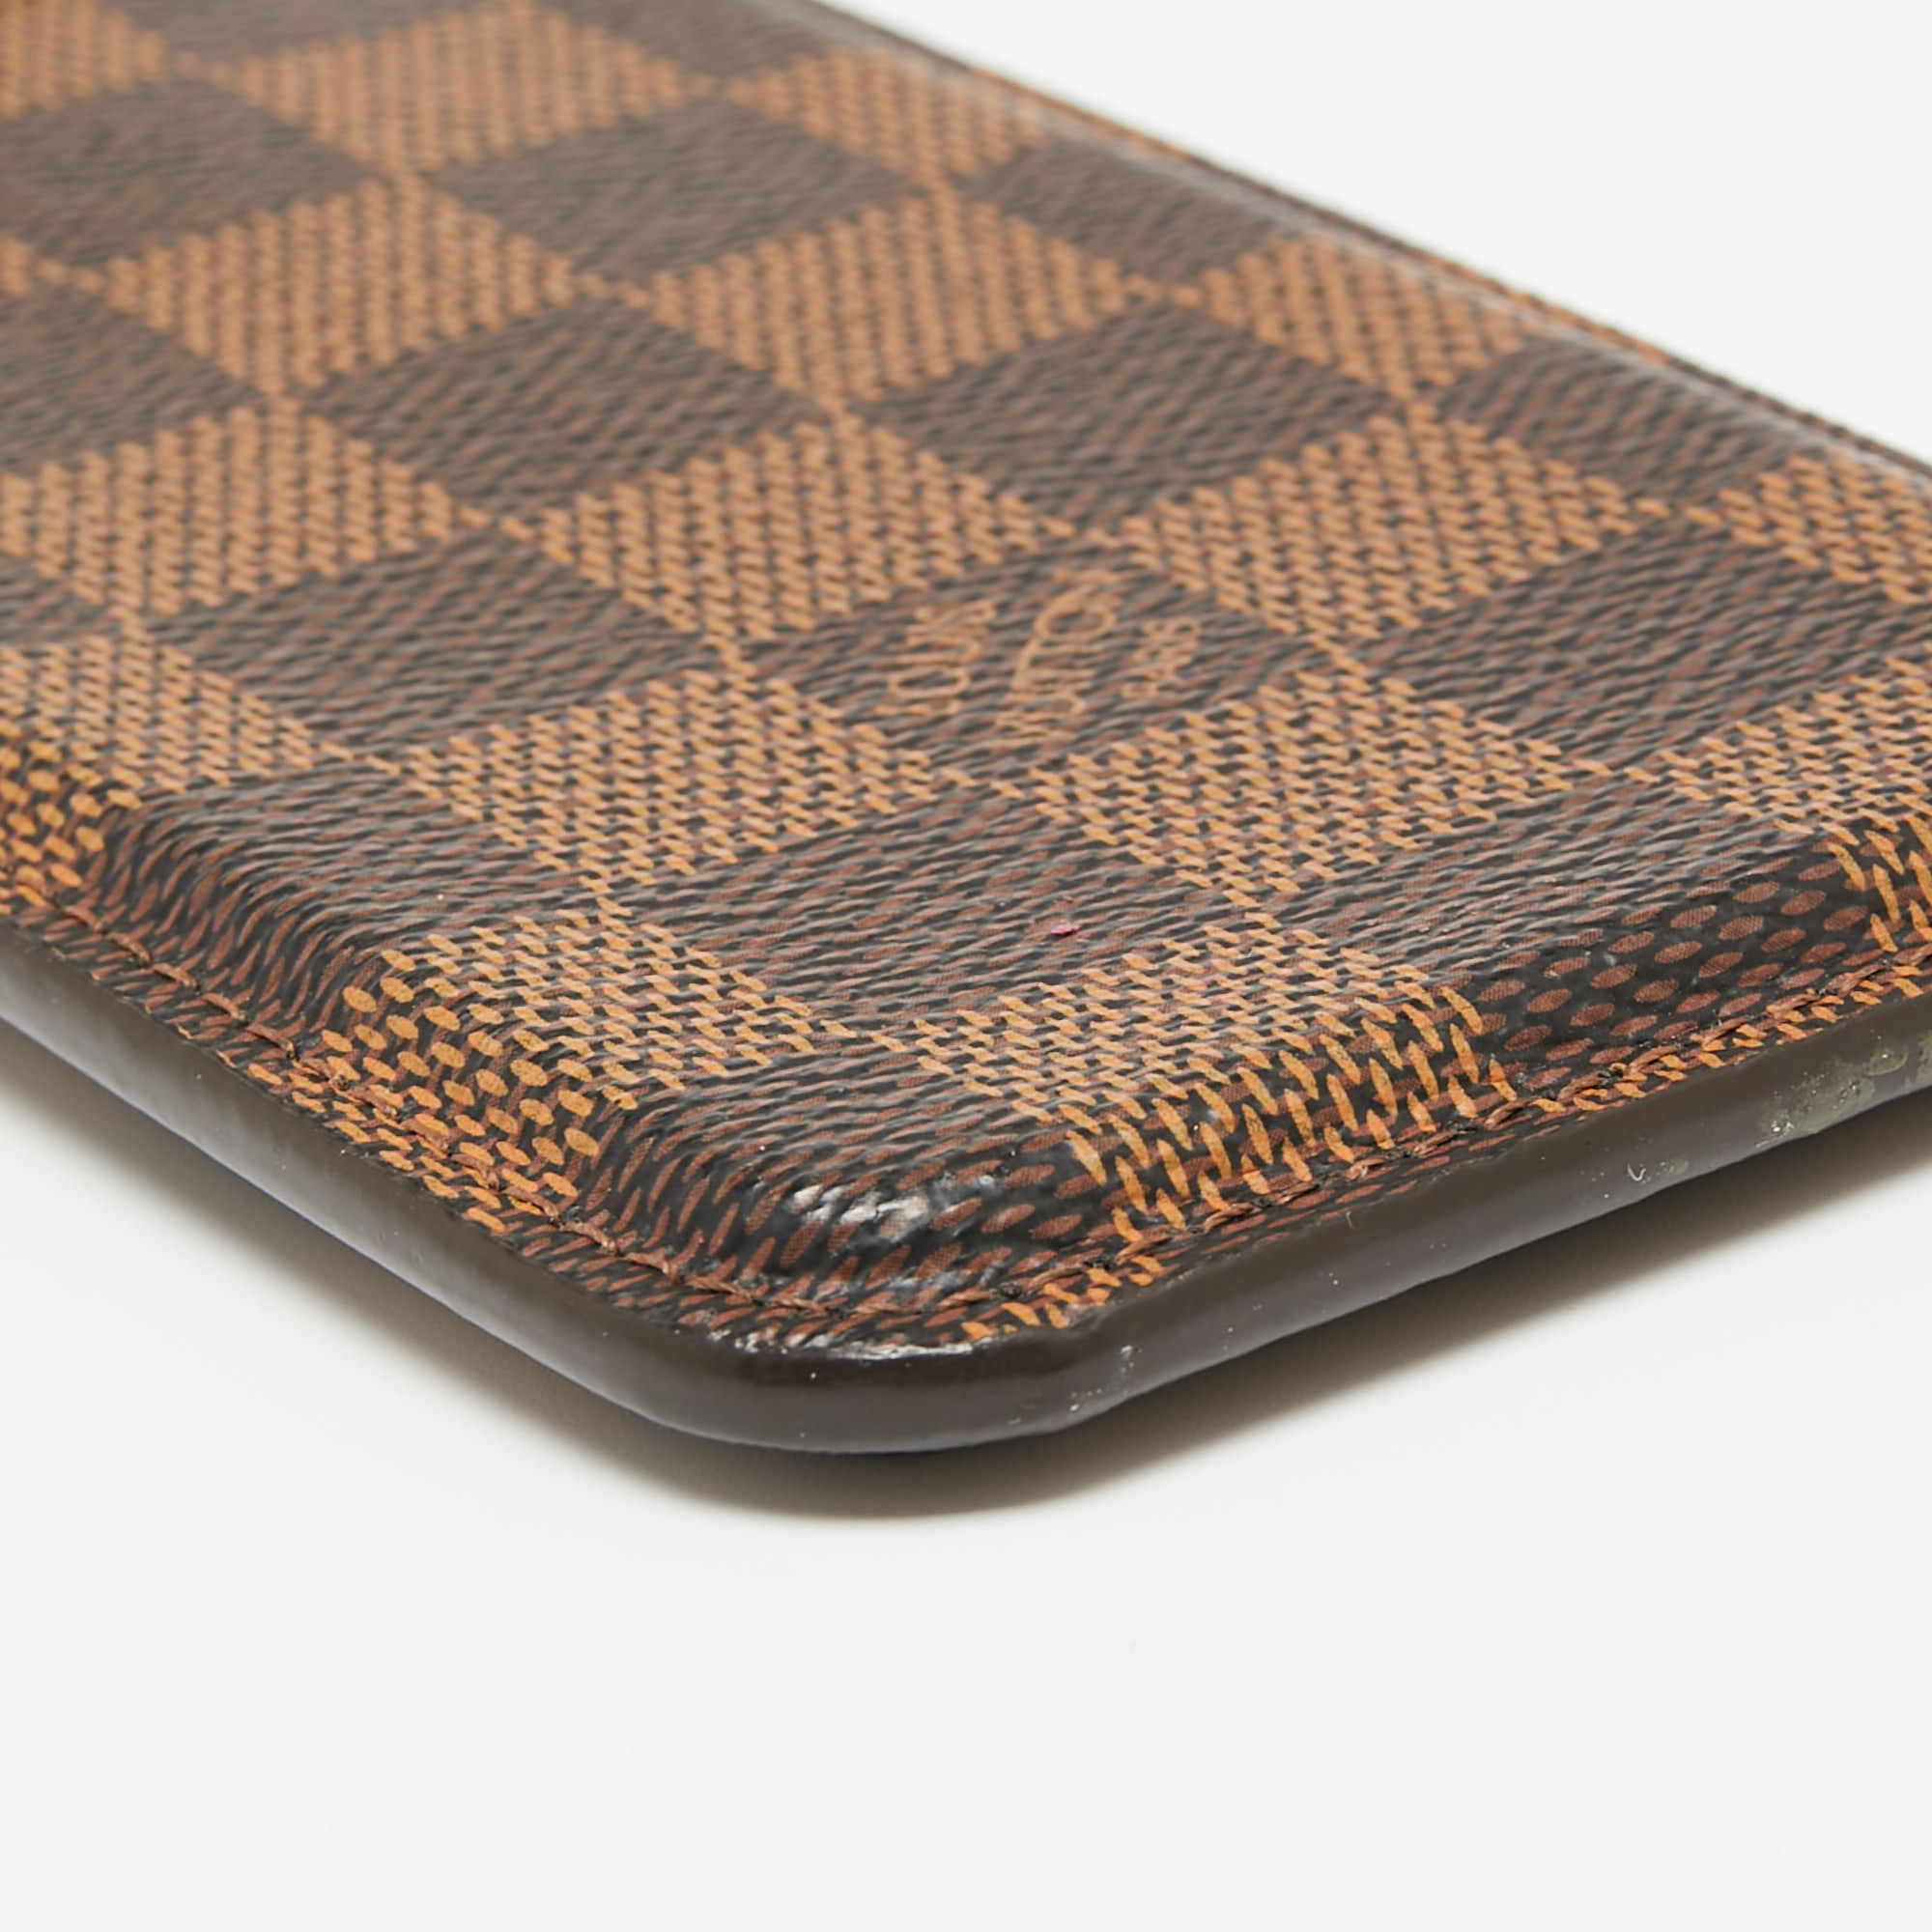 Louis Vuitton Damier Ebene Canvas IPhone 6 Cover